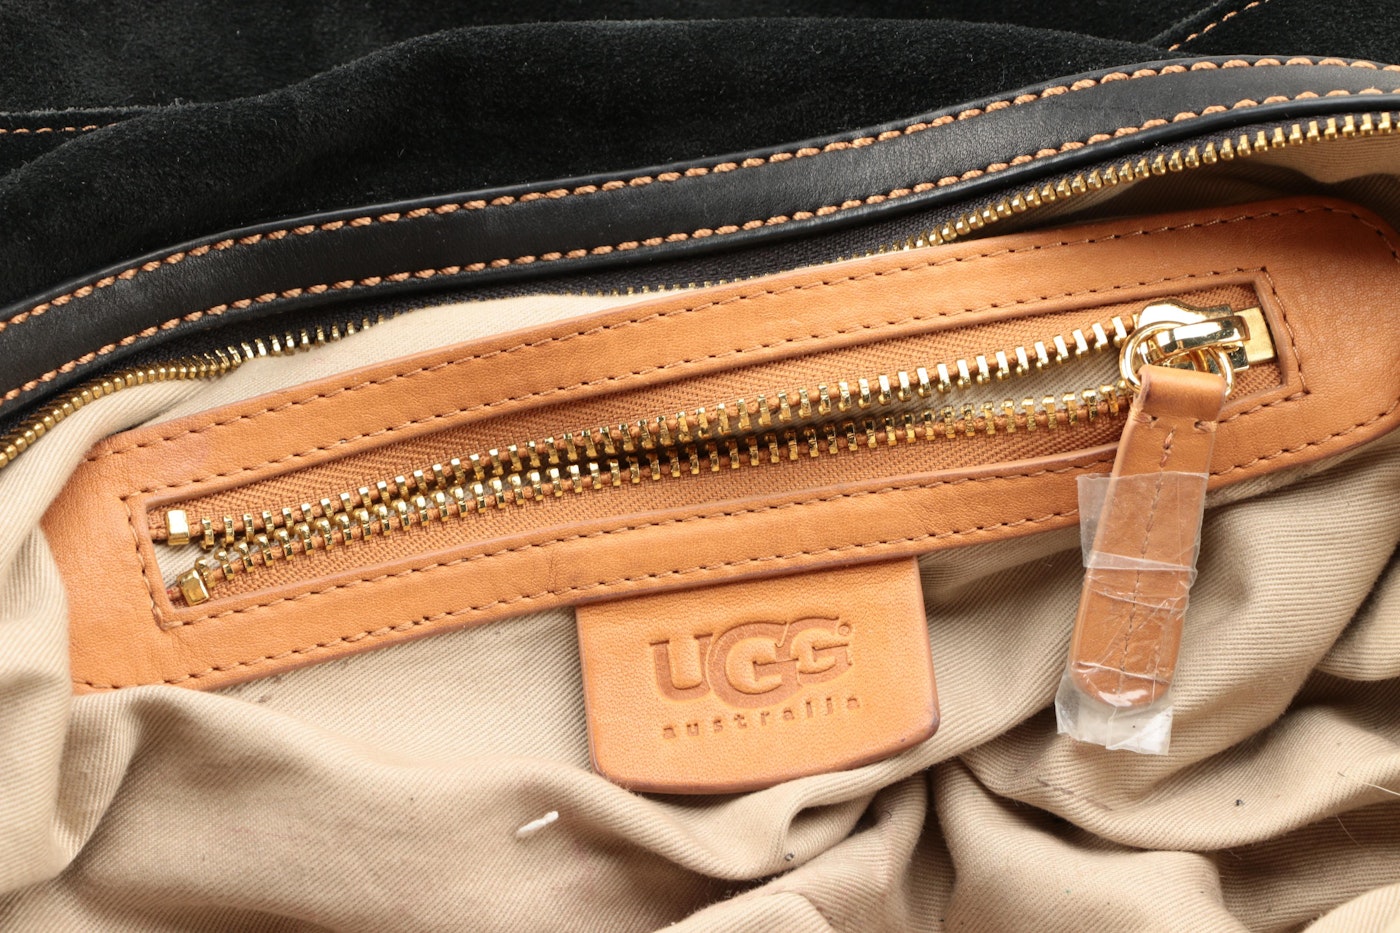 UGG of Australia Black Suede Leather Handbag | EBTH